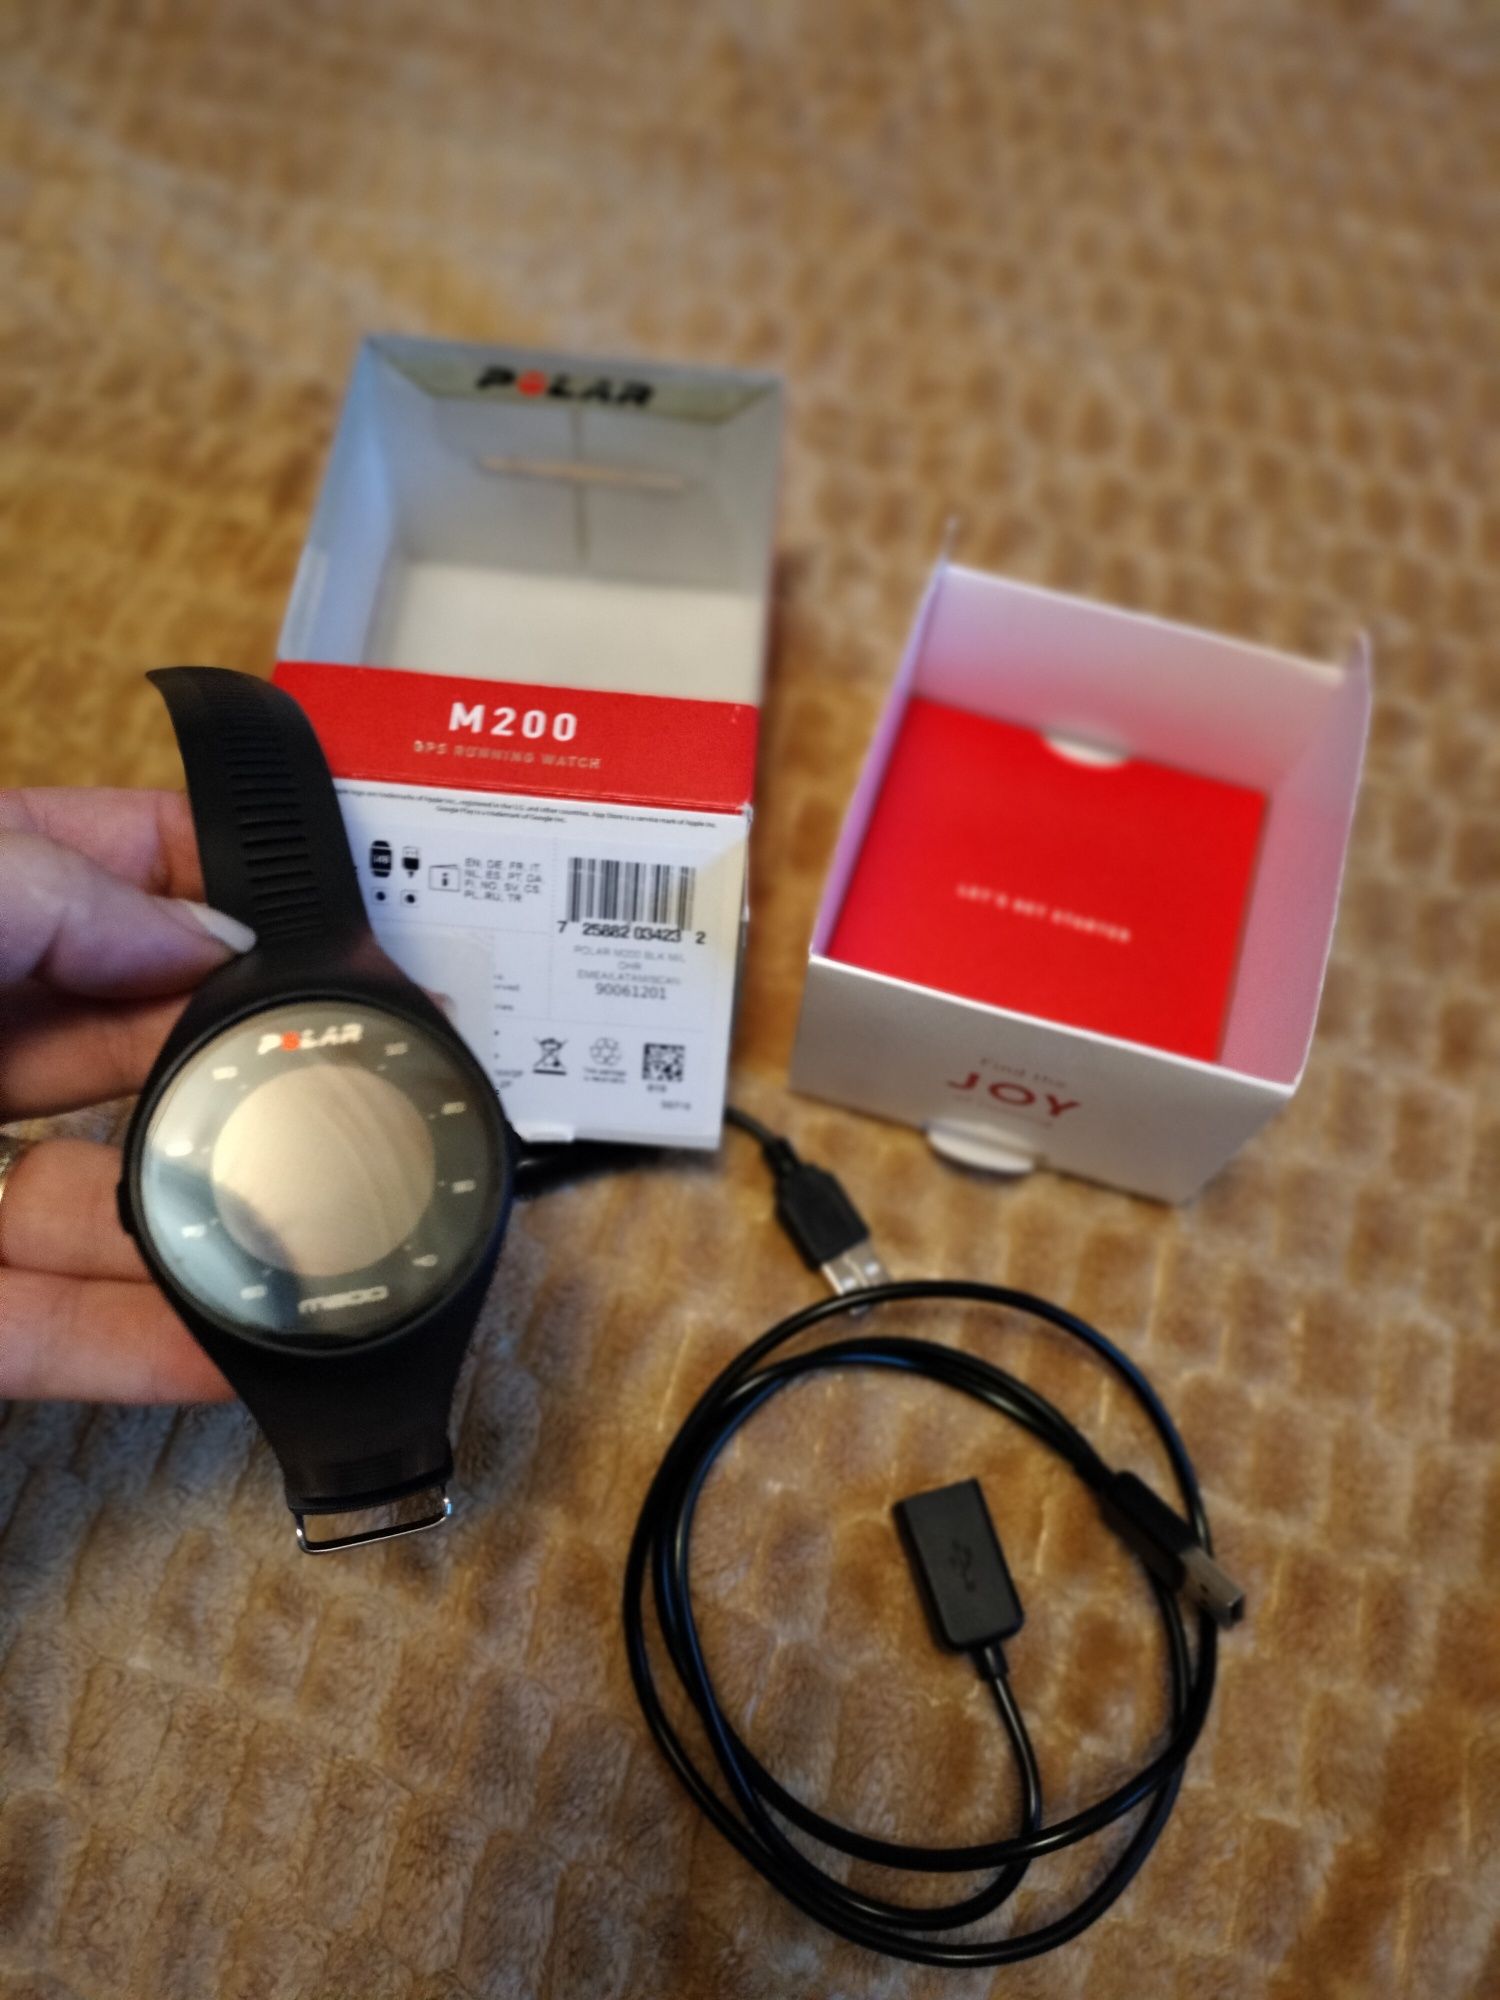 Vând urgent Smartwatch Polar M 200